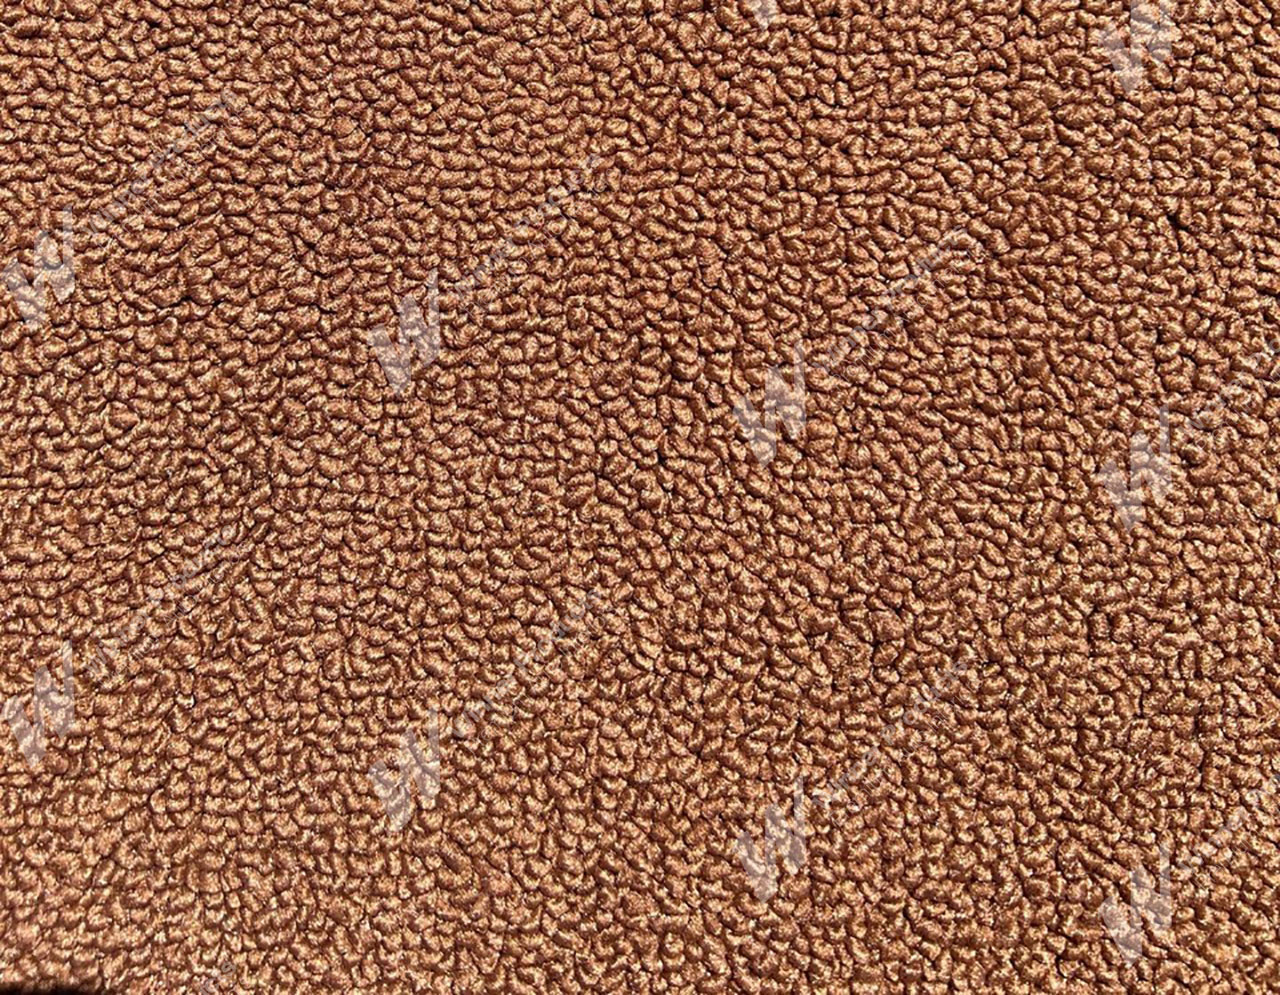 Holden Kingswood HJ Kingswood Panel Van 64V Gazelle Carpet (Image 1 of 1)